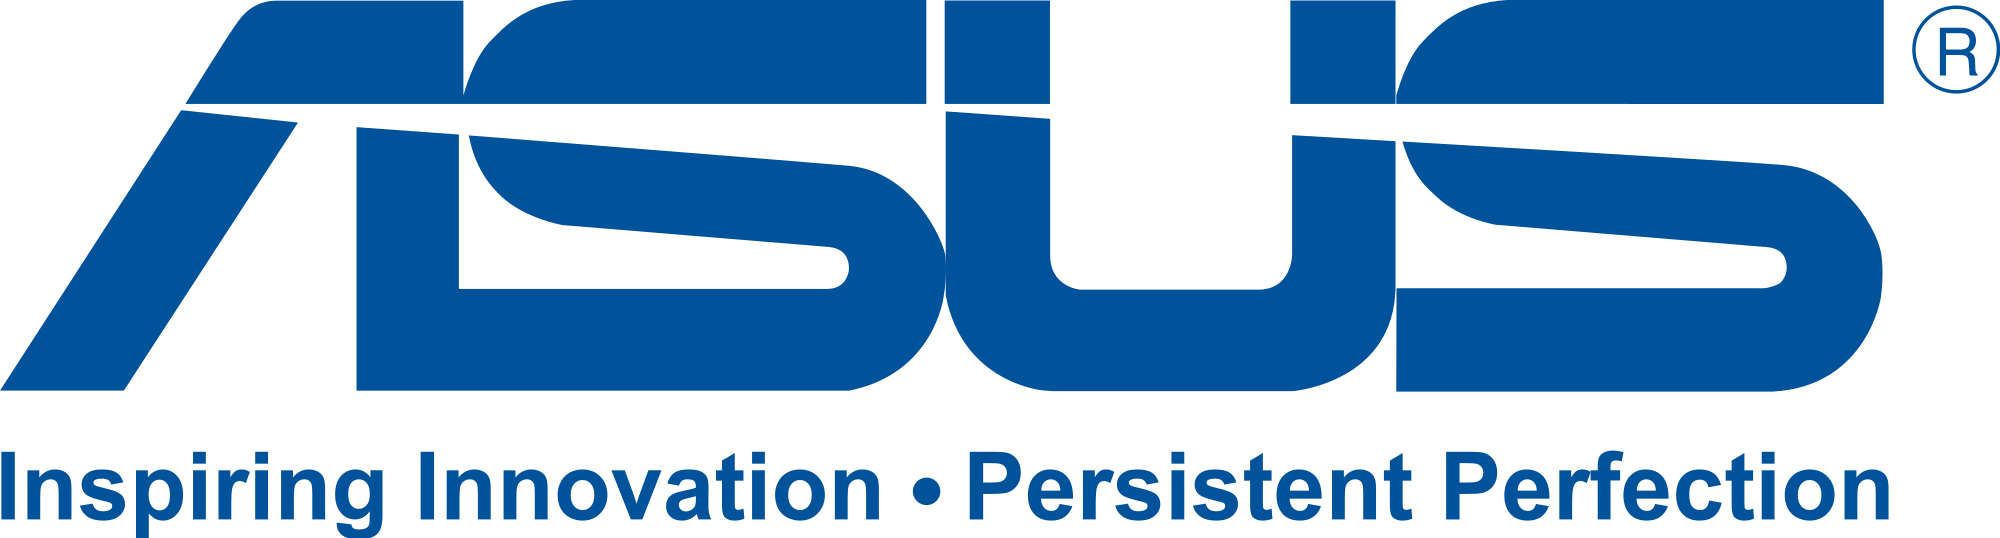 Blue Corporate Logo - File:ASUS Corporate Logo.svg - Wikimedia Commons